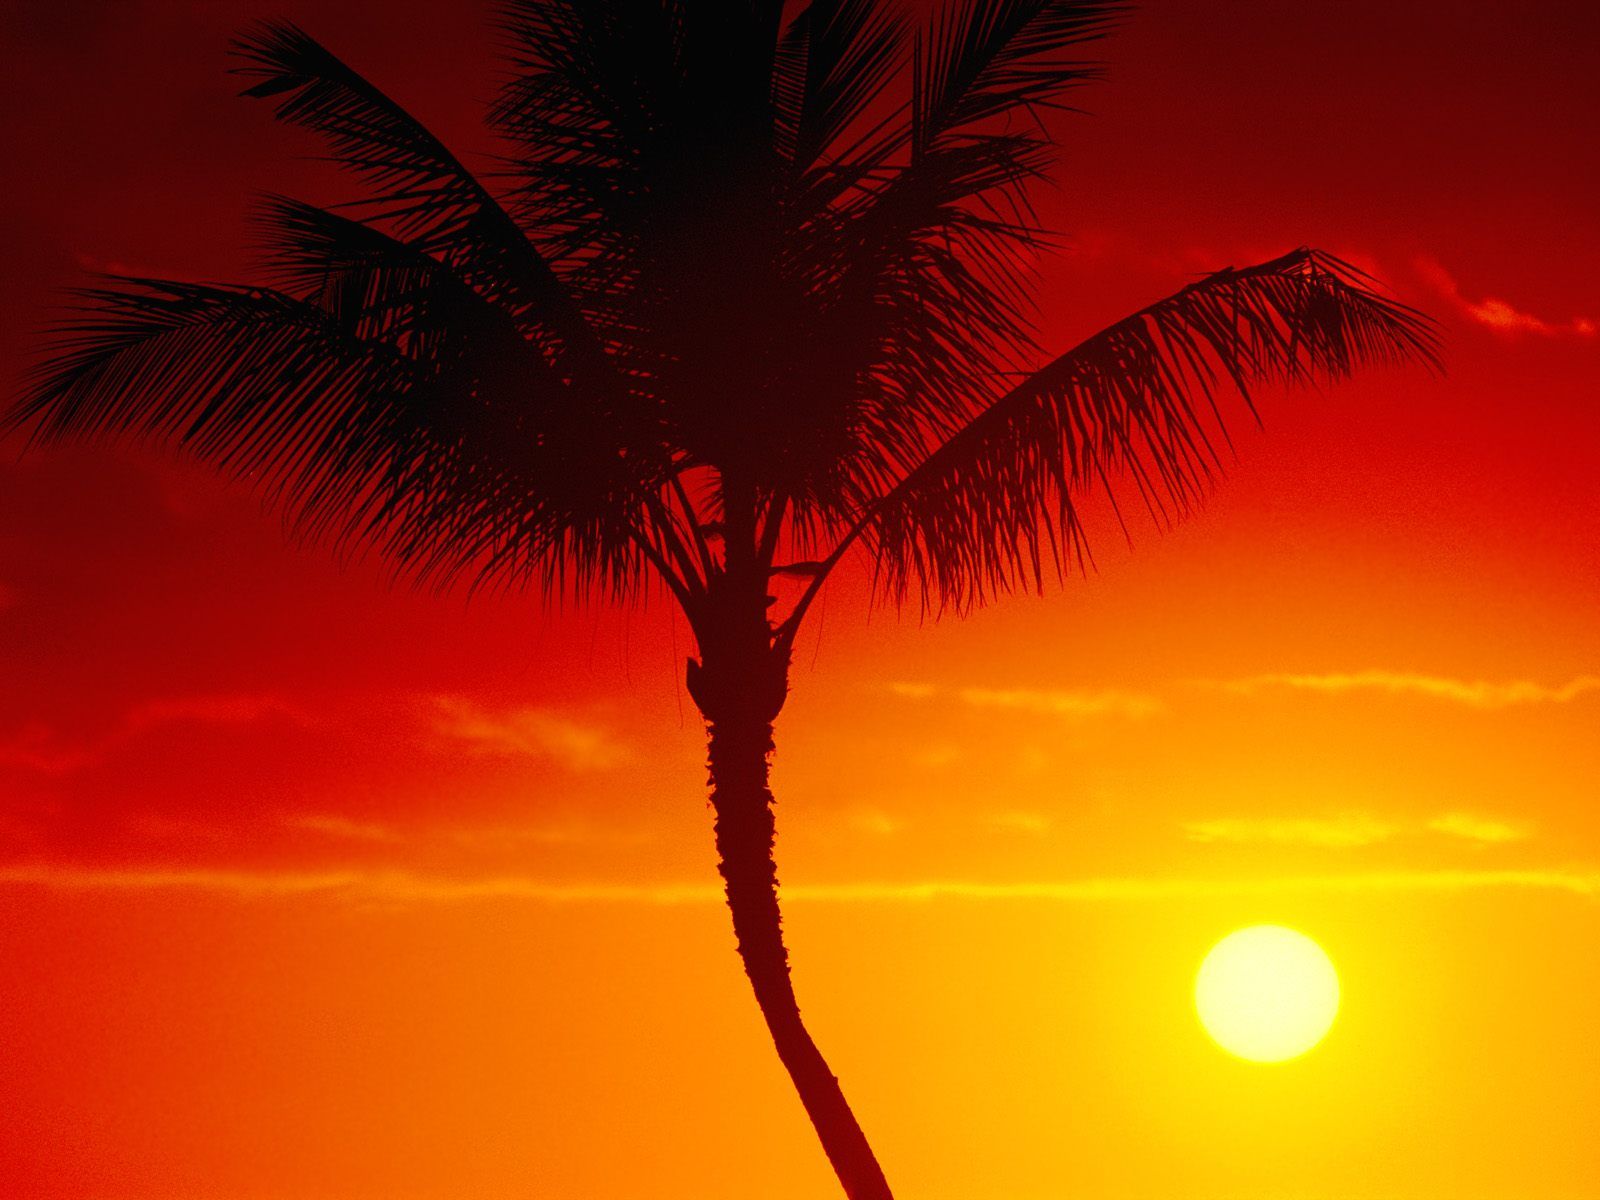 Download wallpaper: sunset, summer, sun, palm tree, orange summer wallpaer, wallpaper for desktop